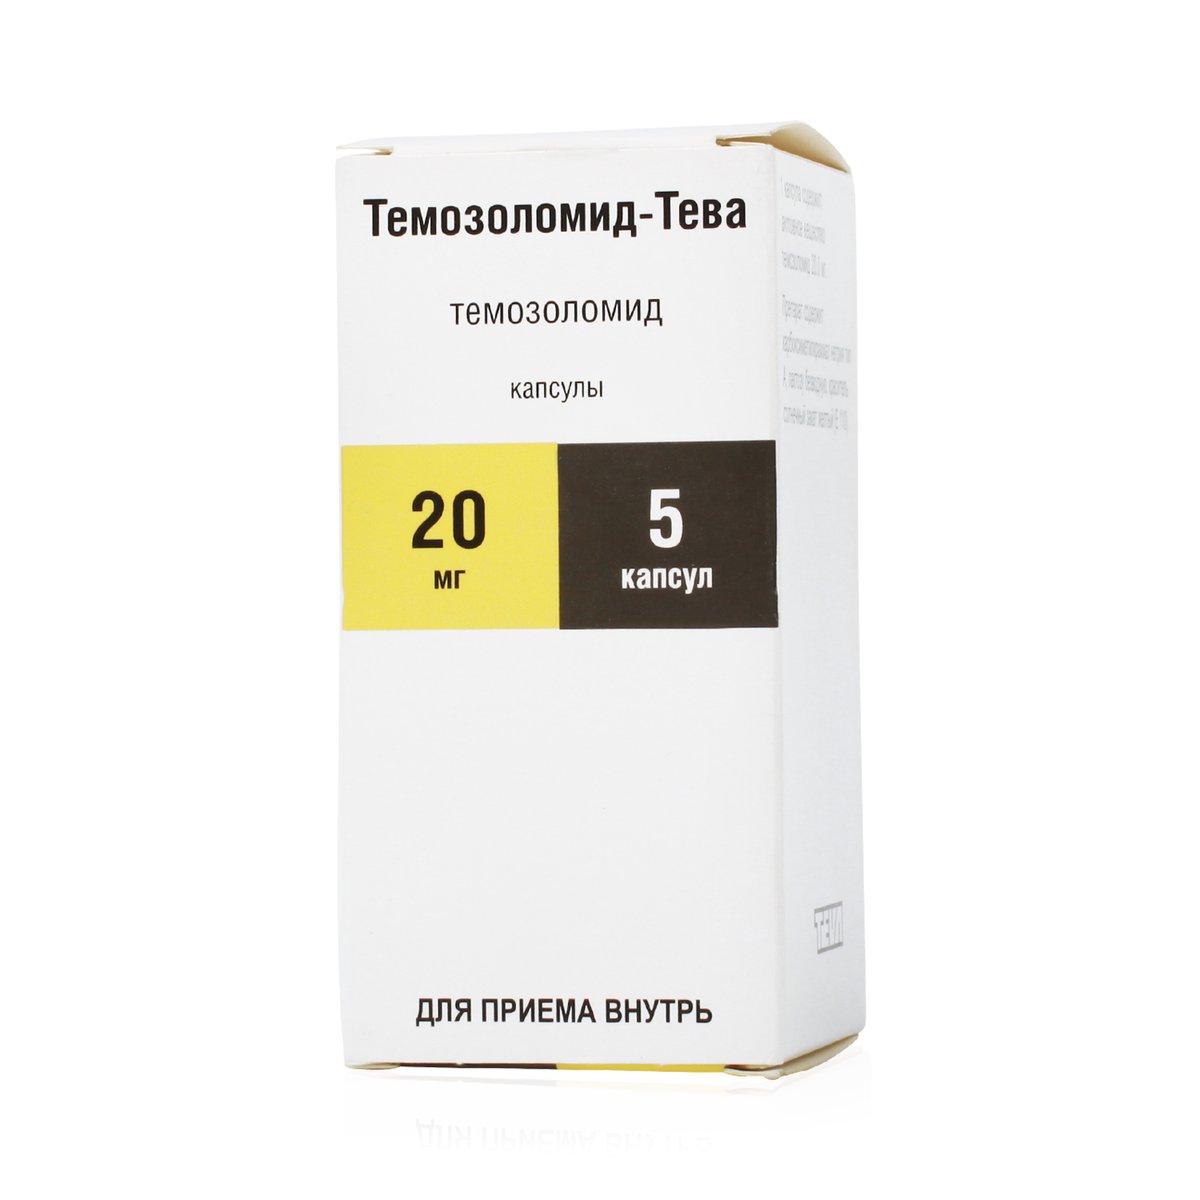 Темозоломид-Тева (капсулы, 5 шт, 20 мг) - цена,  онлайн  .